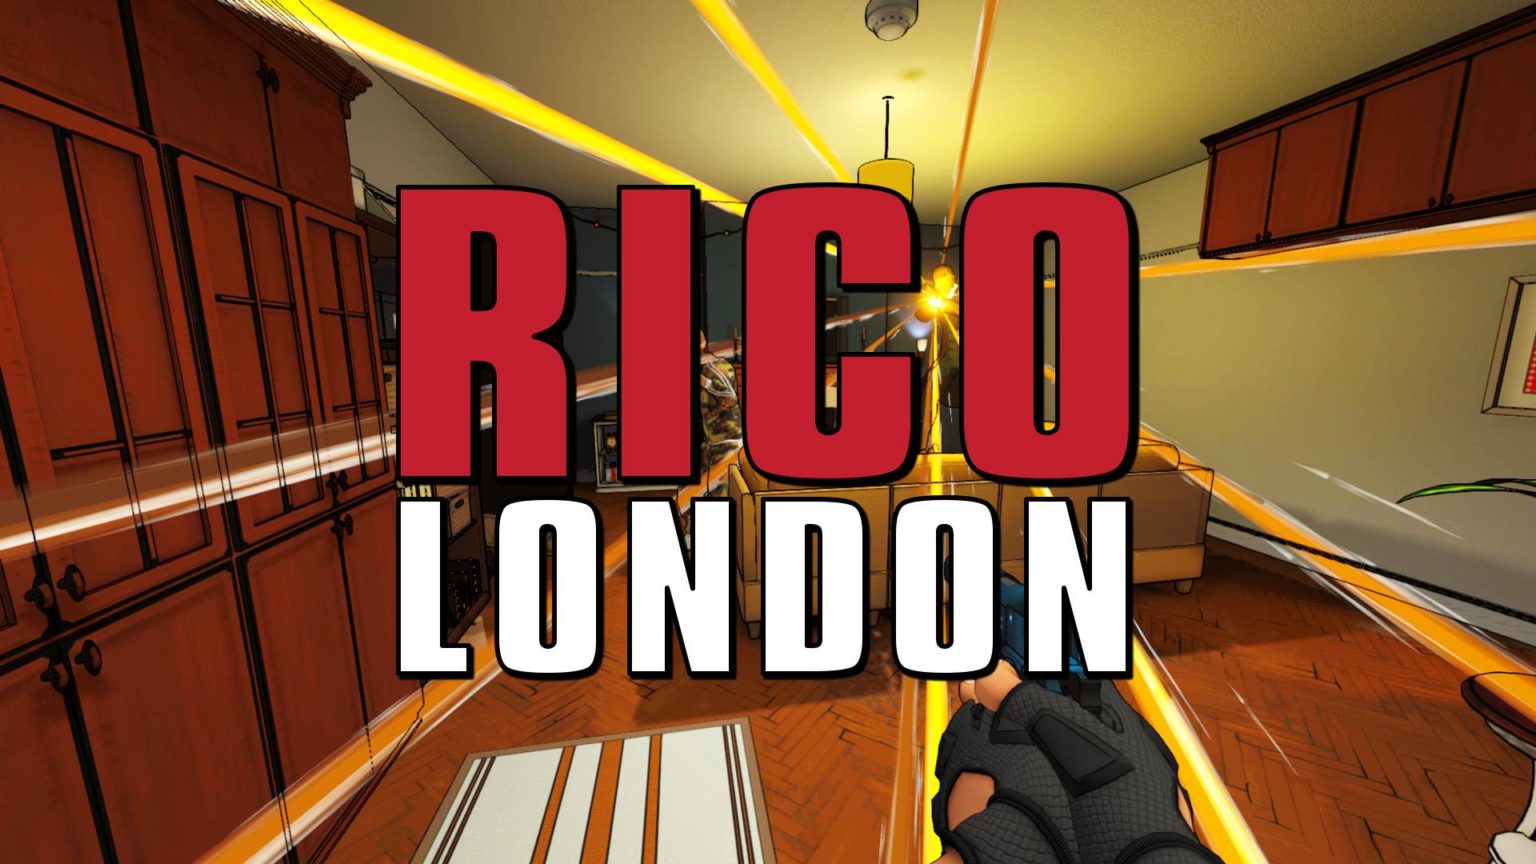 rico london review